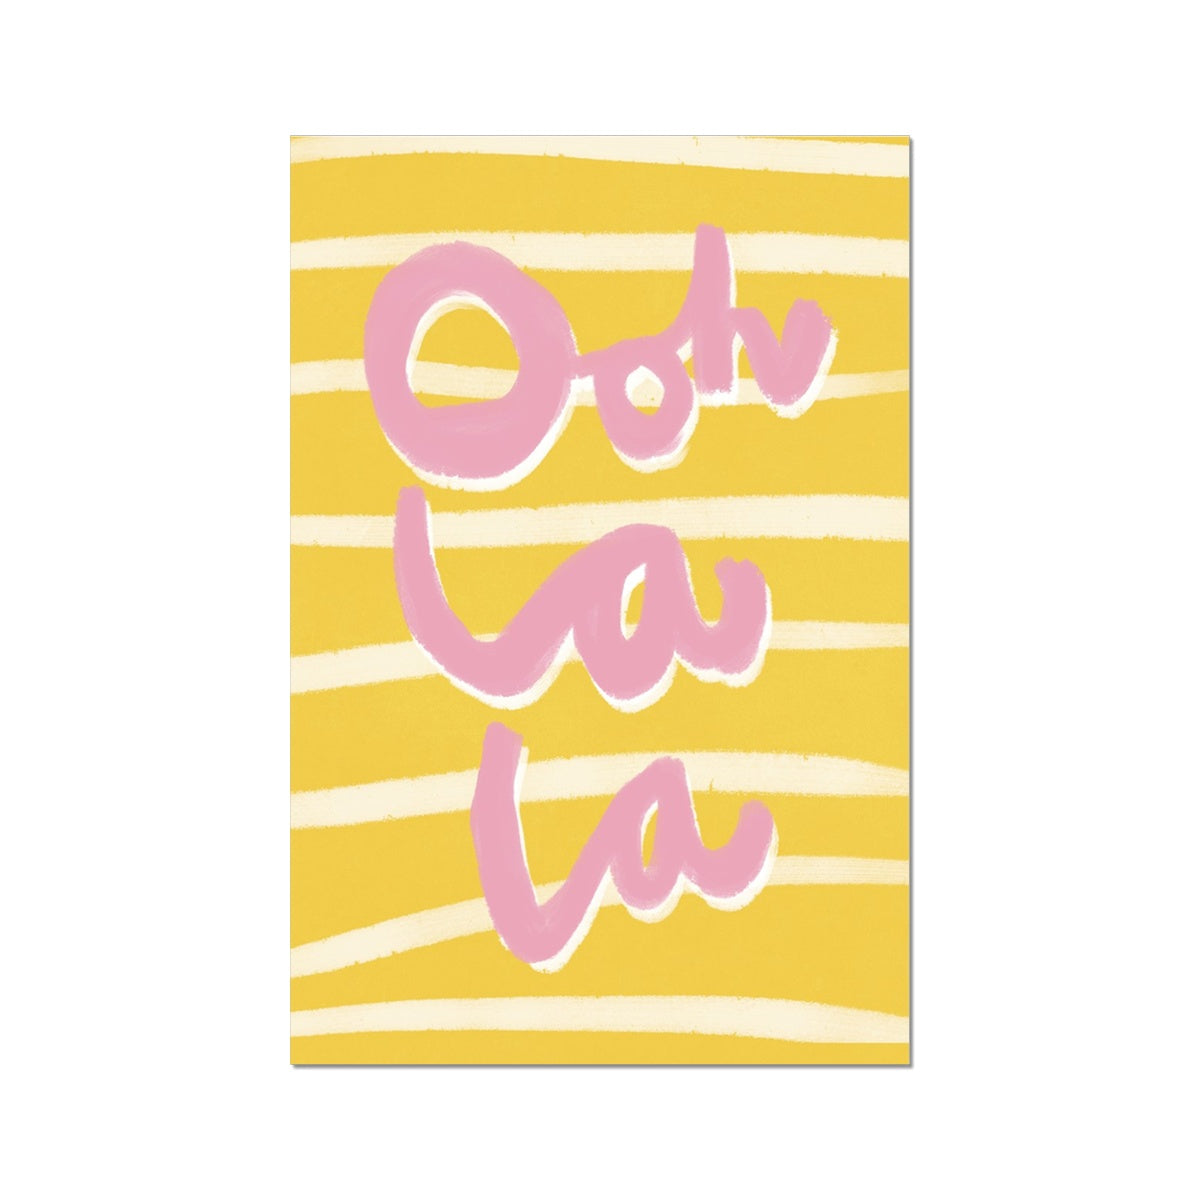 Ooh La La Art Print - Yellow, White and Pink Fine Art Print